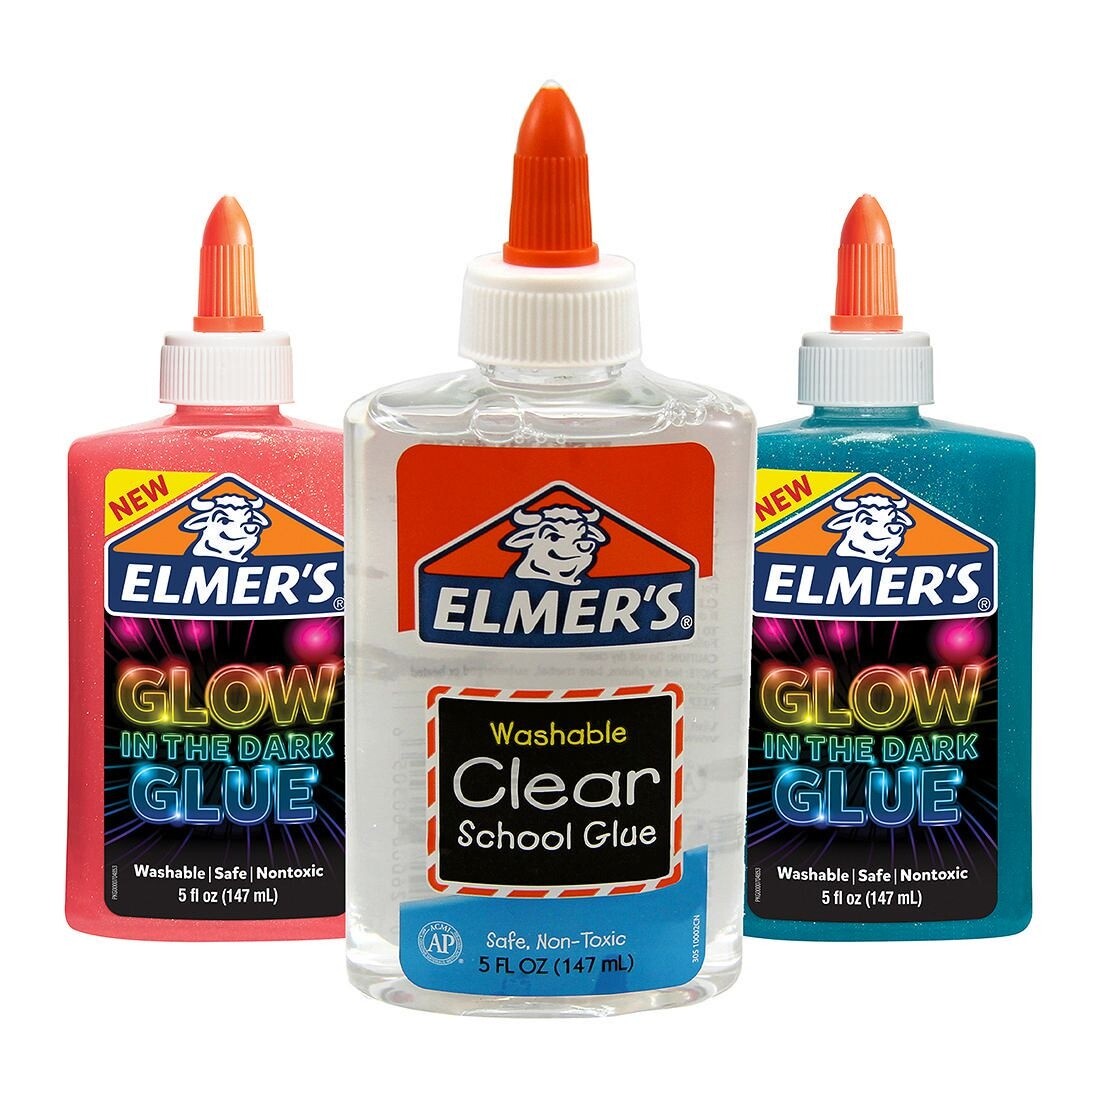 Elmers Glow In The Dark Glue Super Pack Elmers